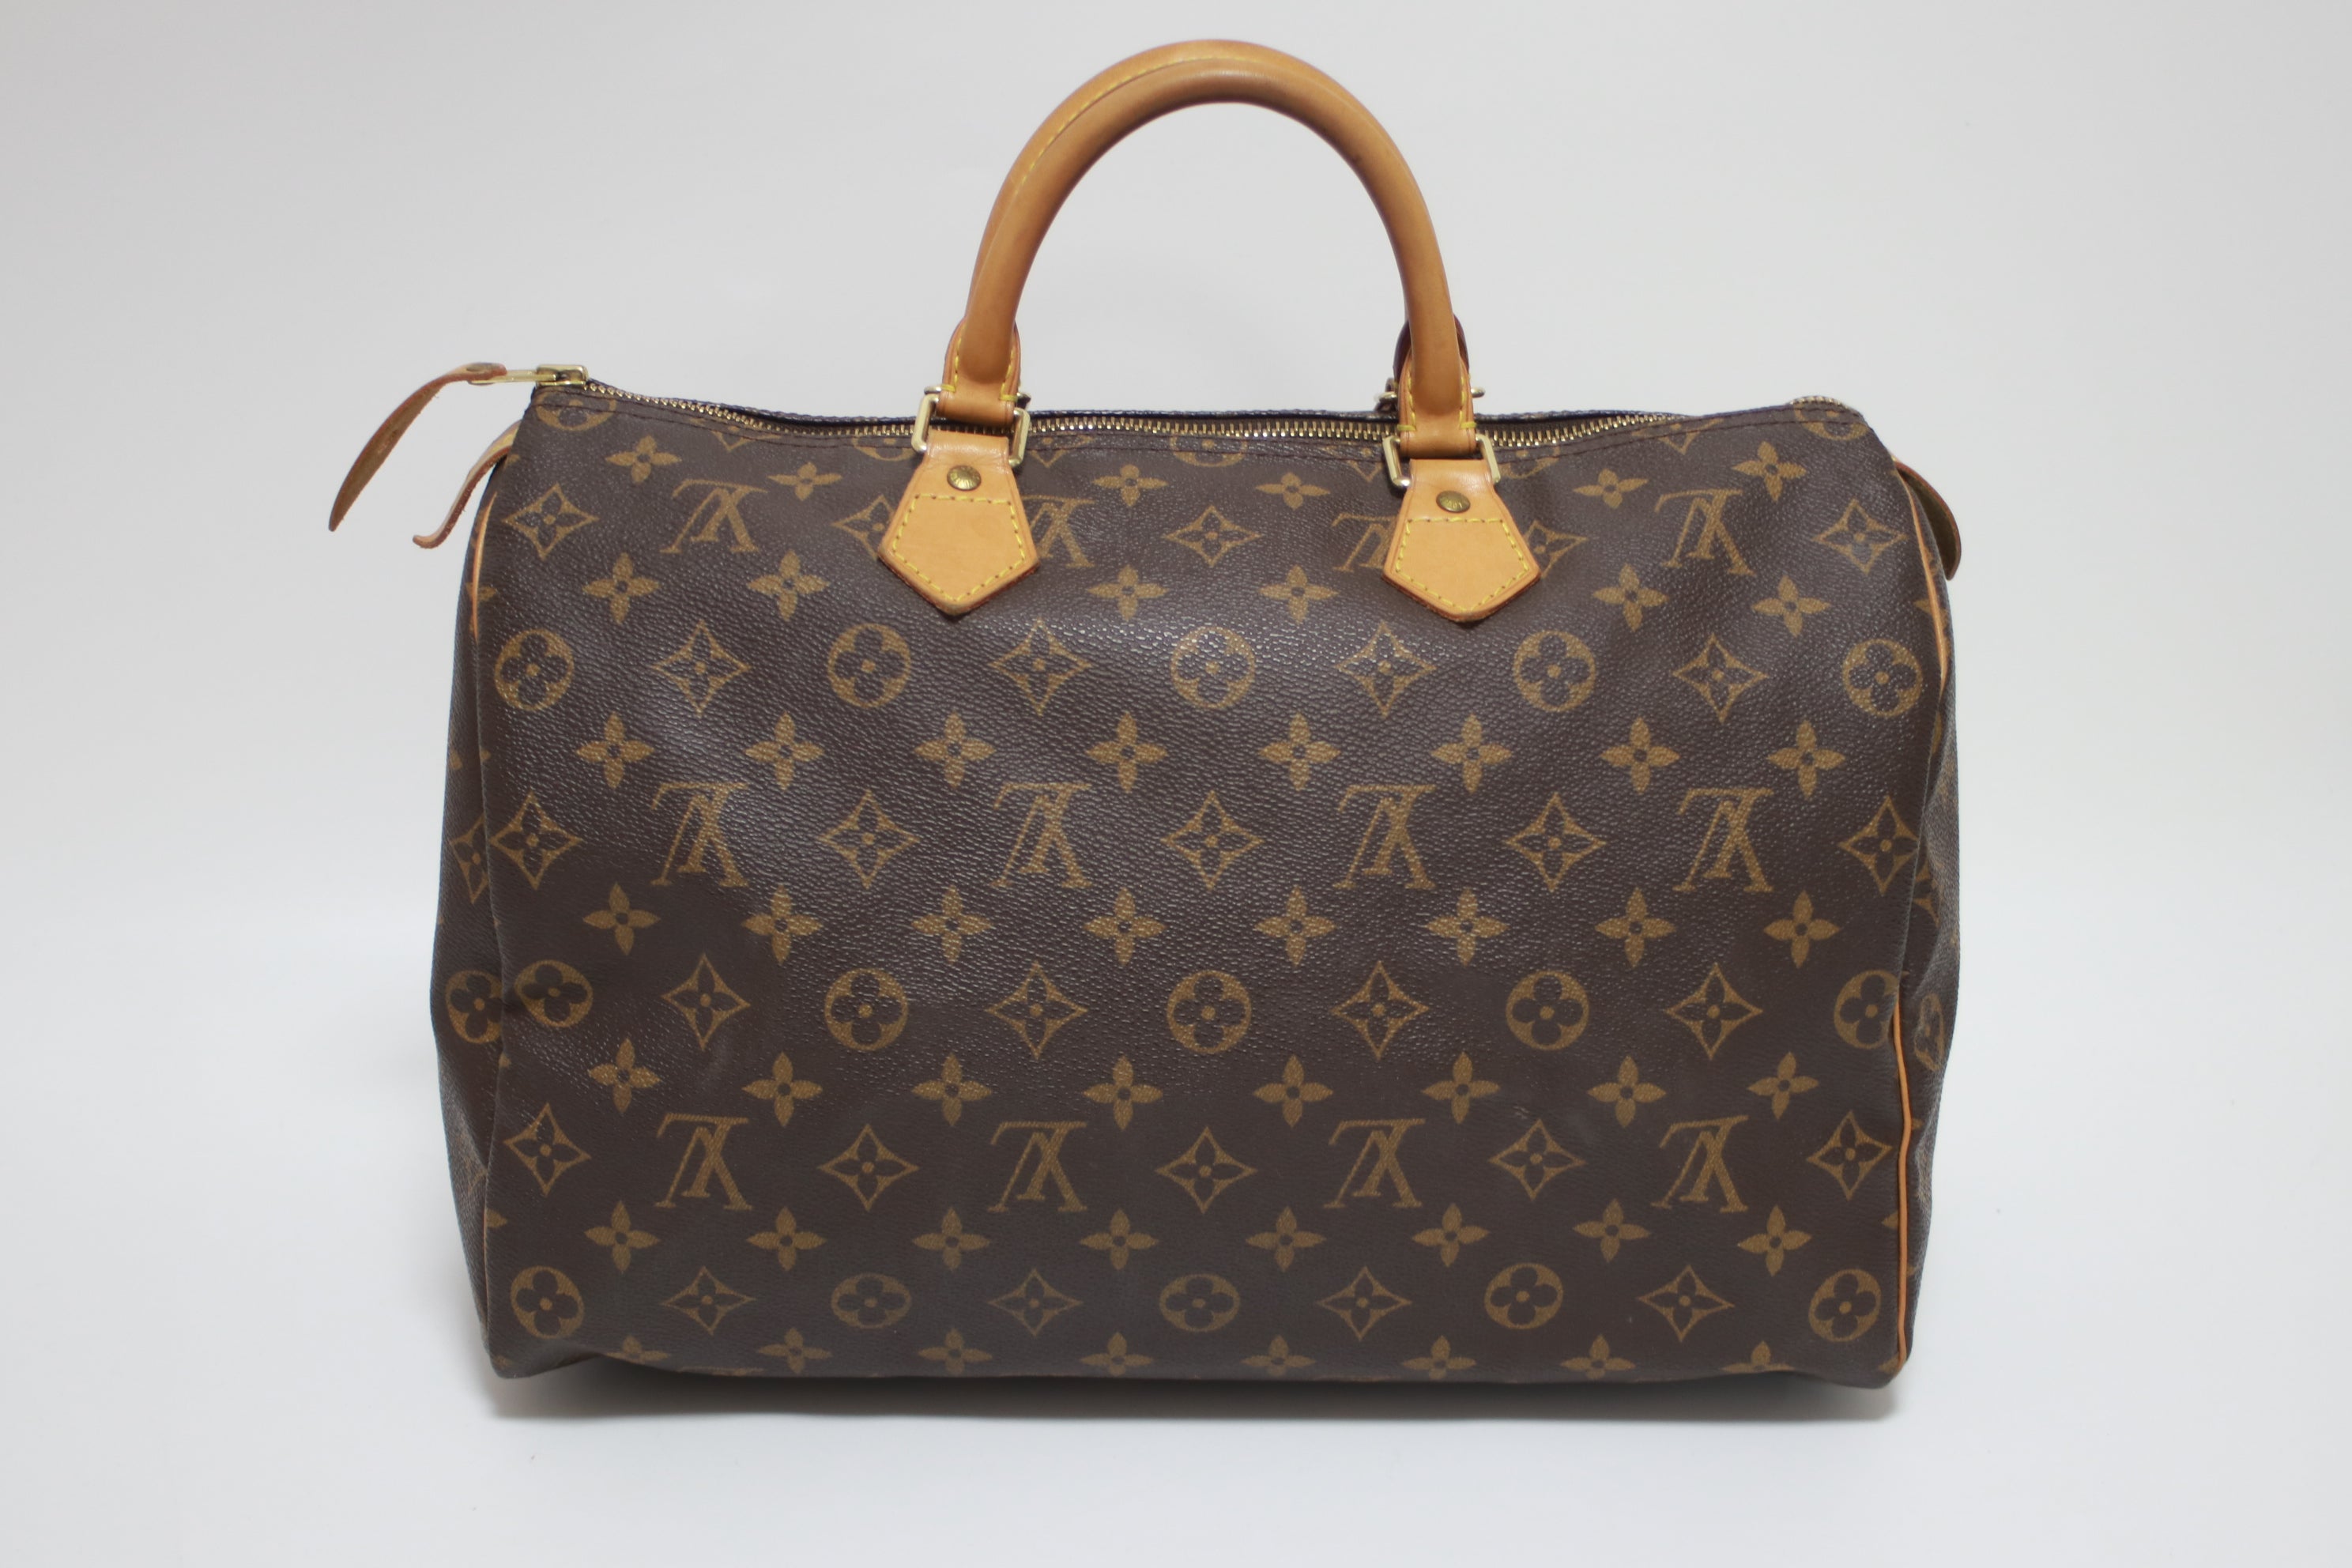 Louis Vuitton Speedy 35 Handbag Used (7960)